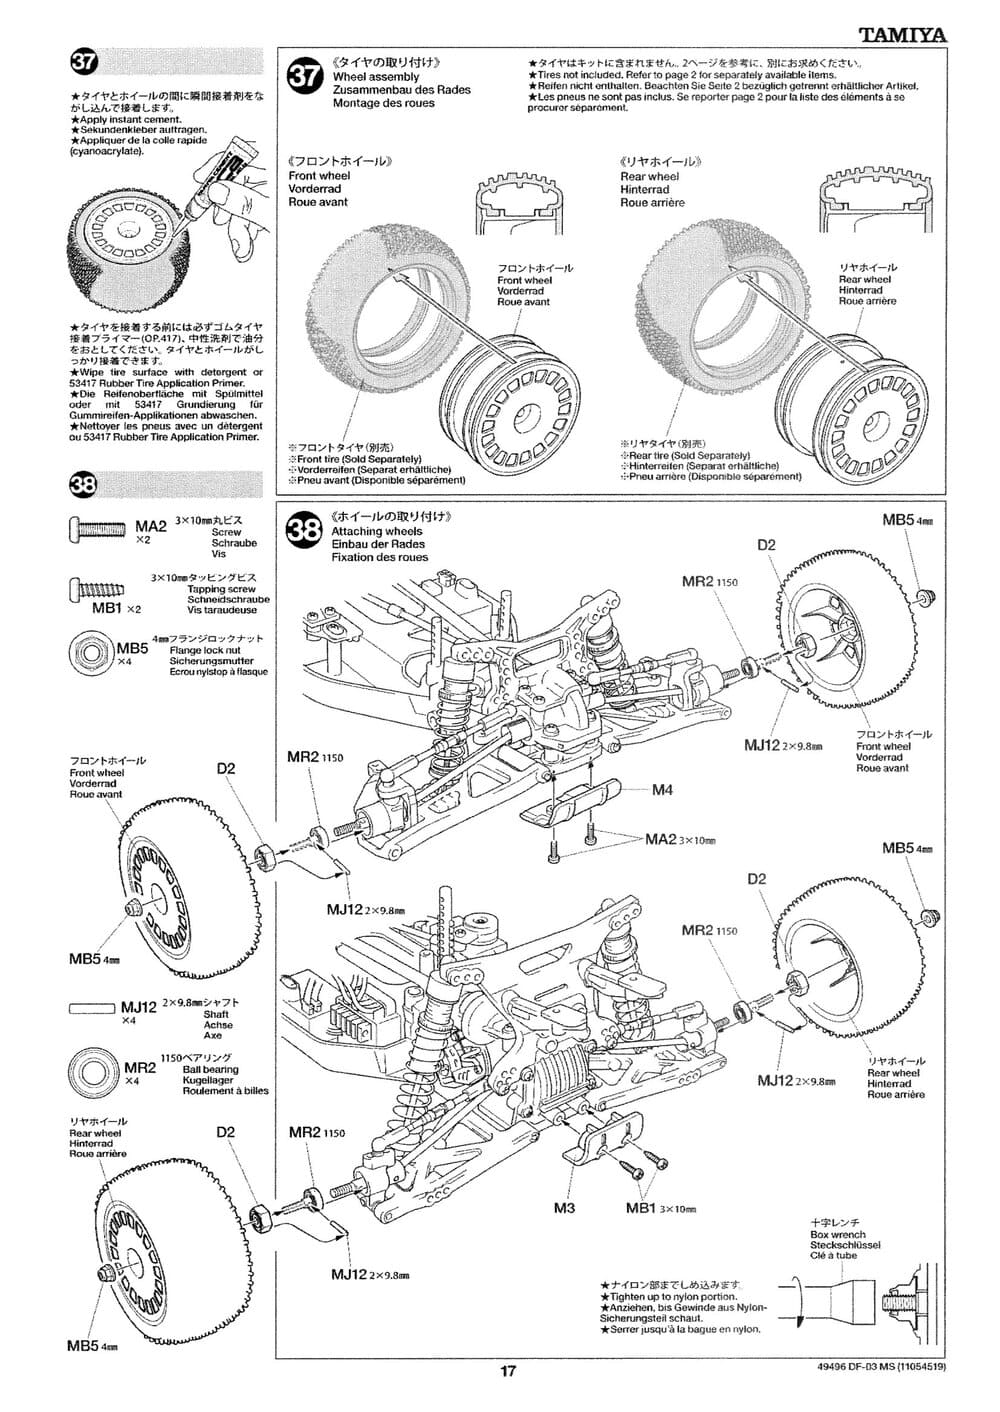 Tamiya - DF-03 MS Chassis Chassis - Manual - Page 17